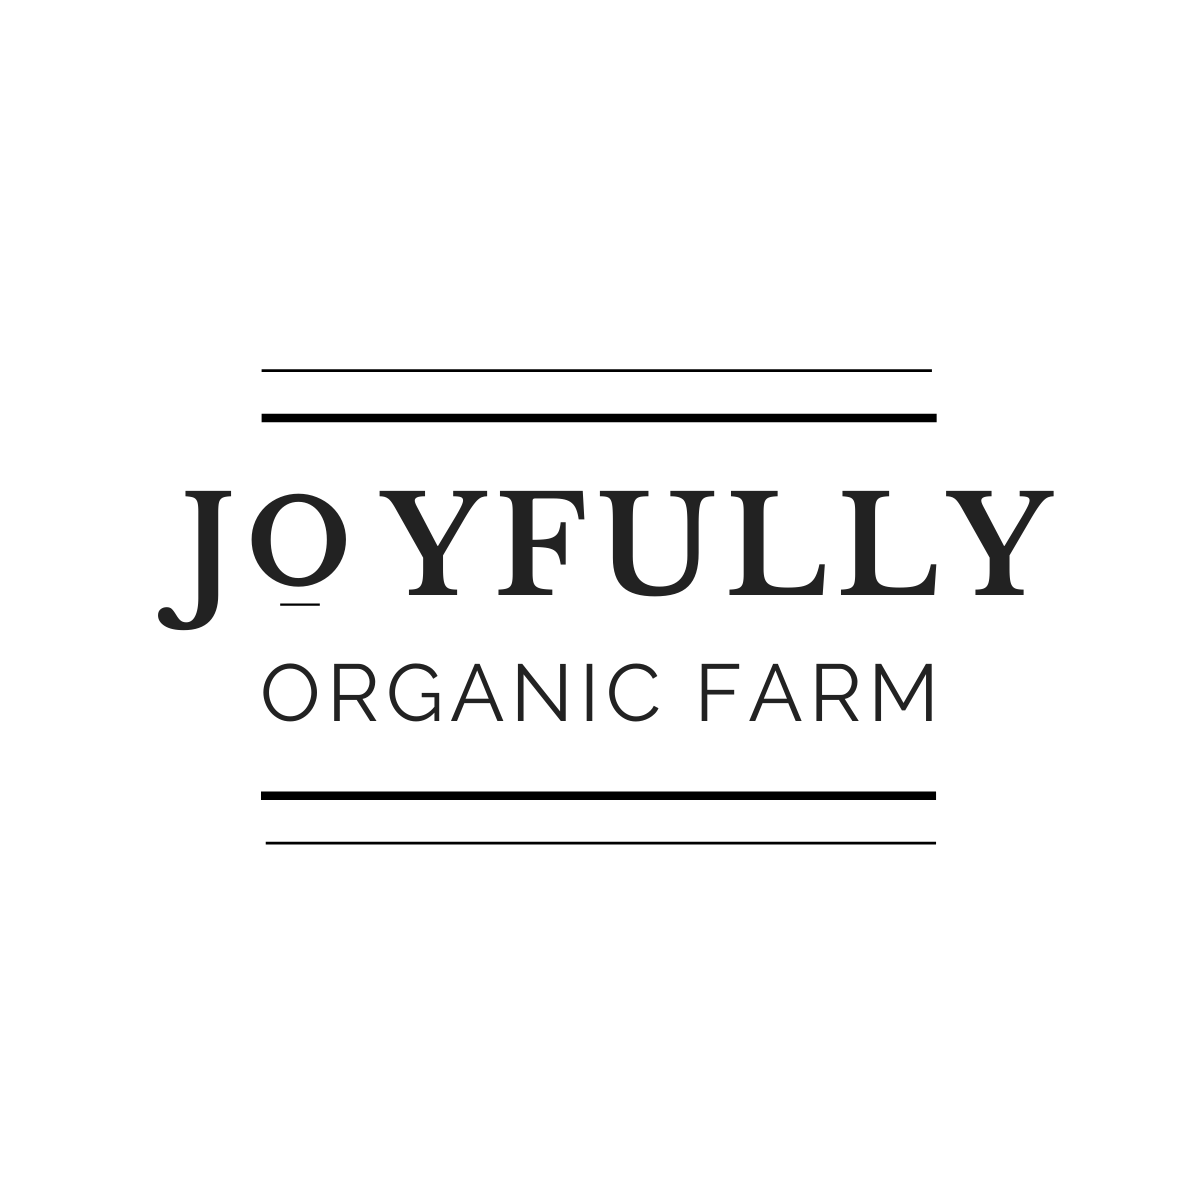 Joyfully Organic Farm 